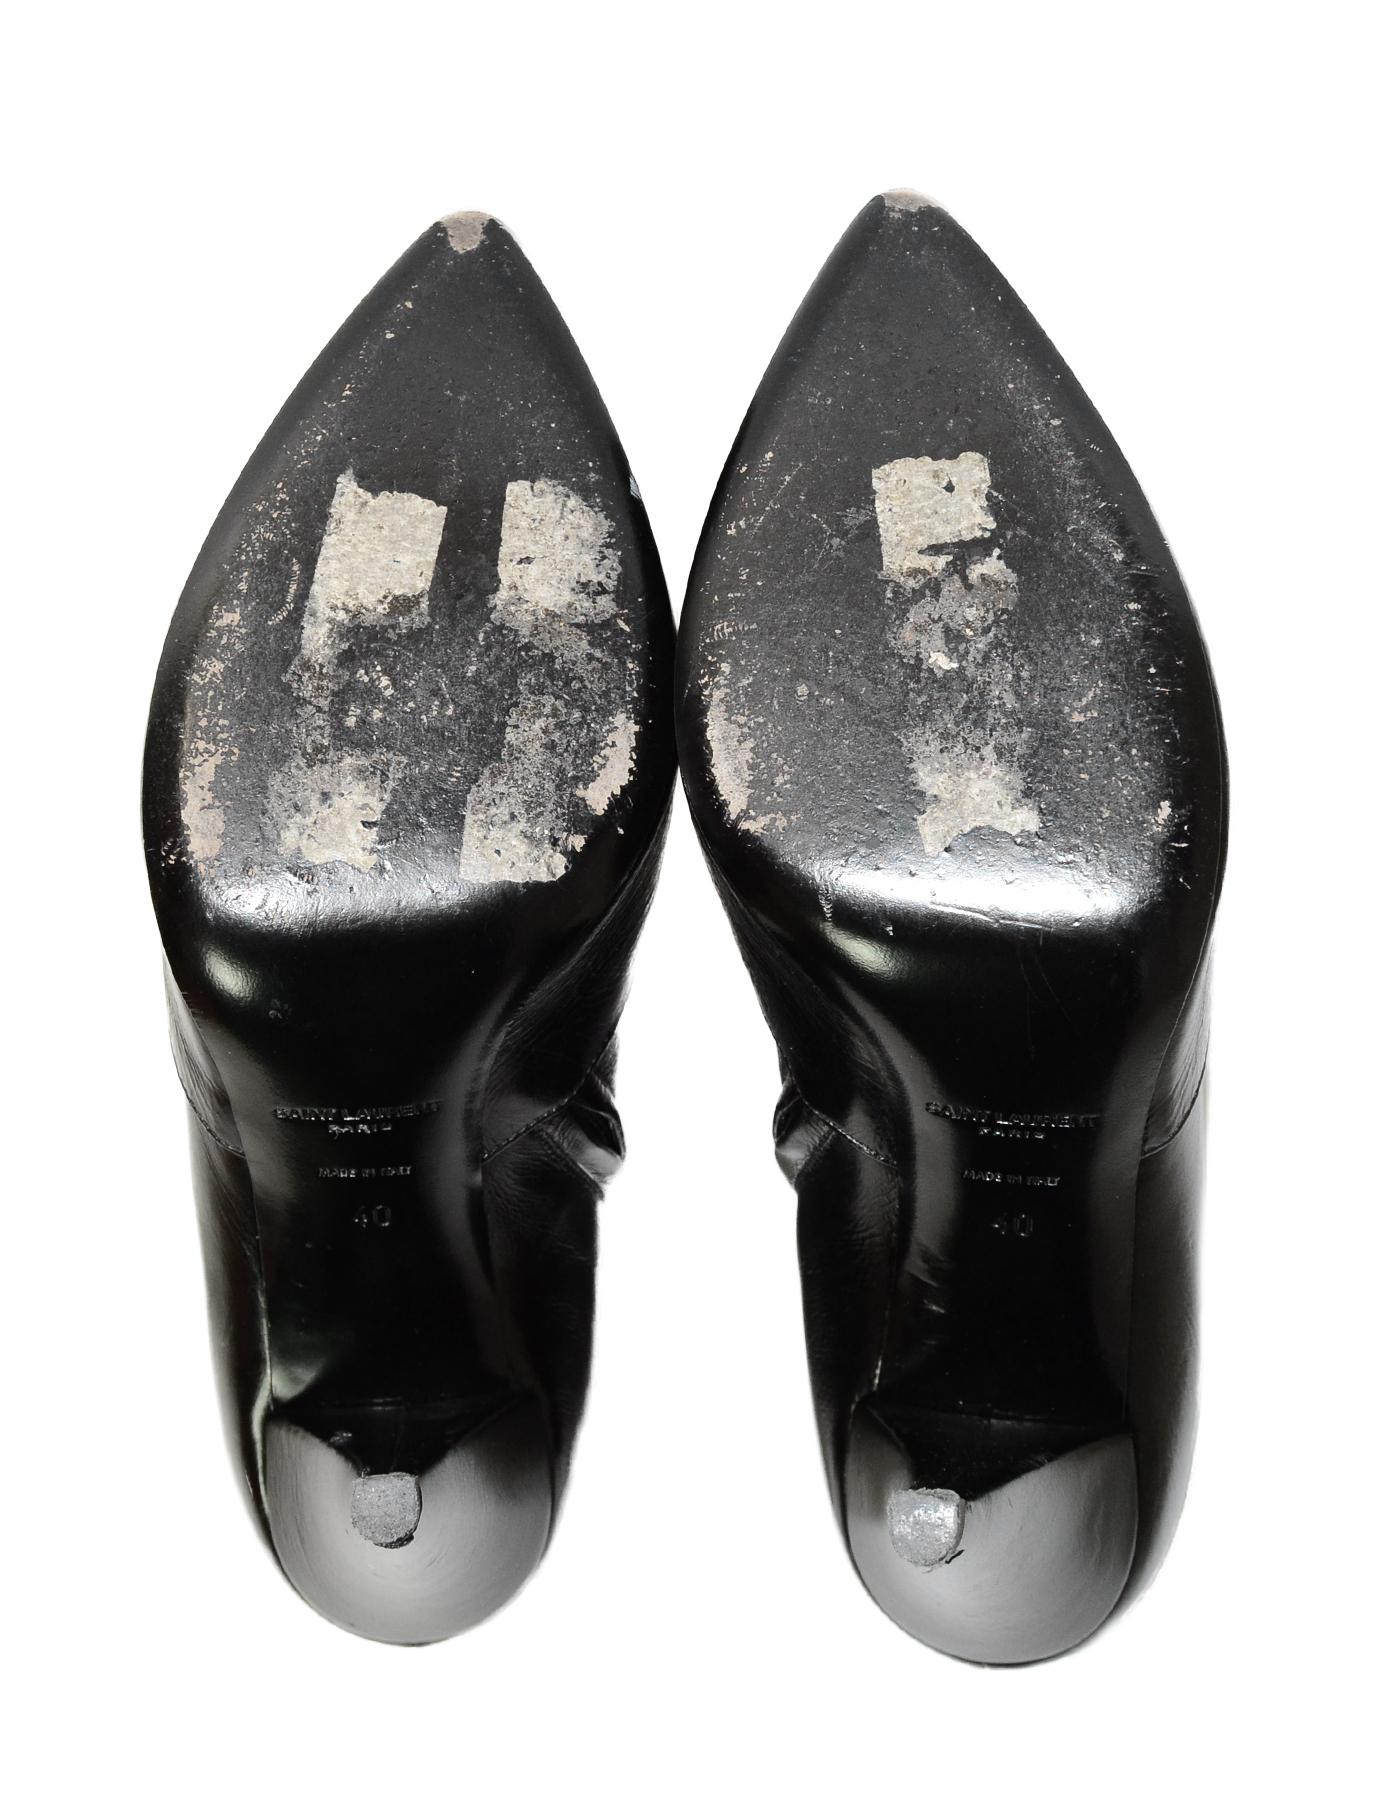 YSL Yves Saint Laurent Fetish Black Leather Ankle Boot Sz 40 2